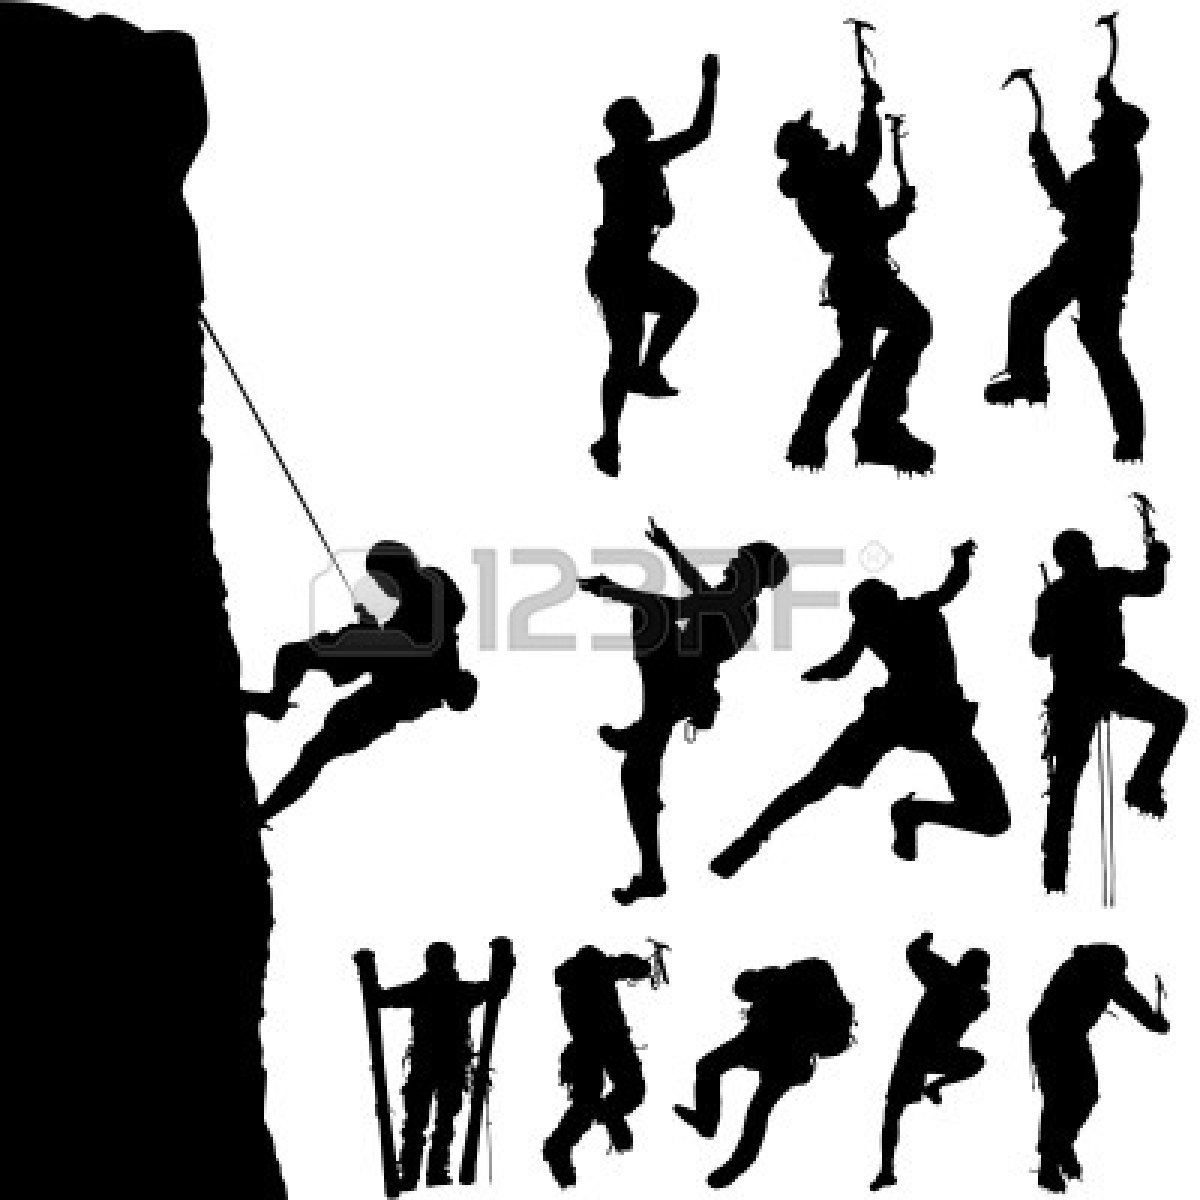 Rock climbers silhouette.